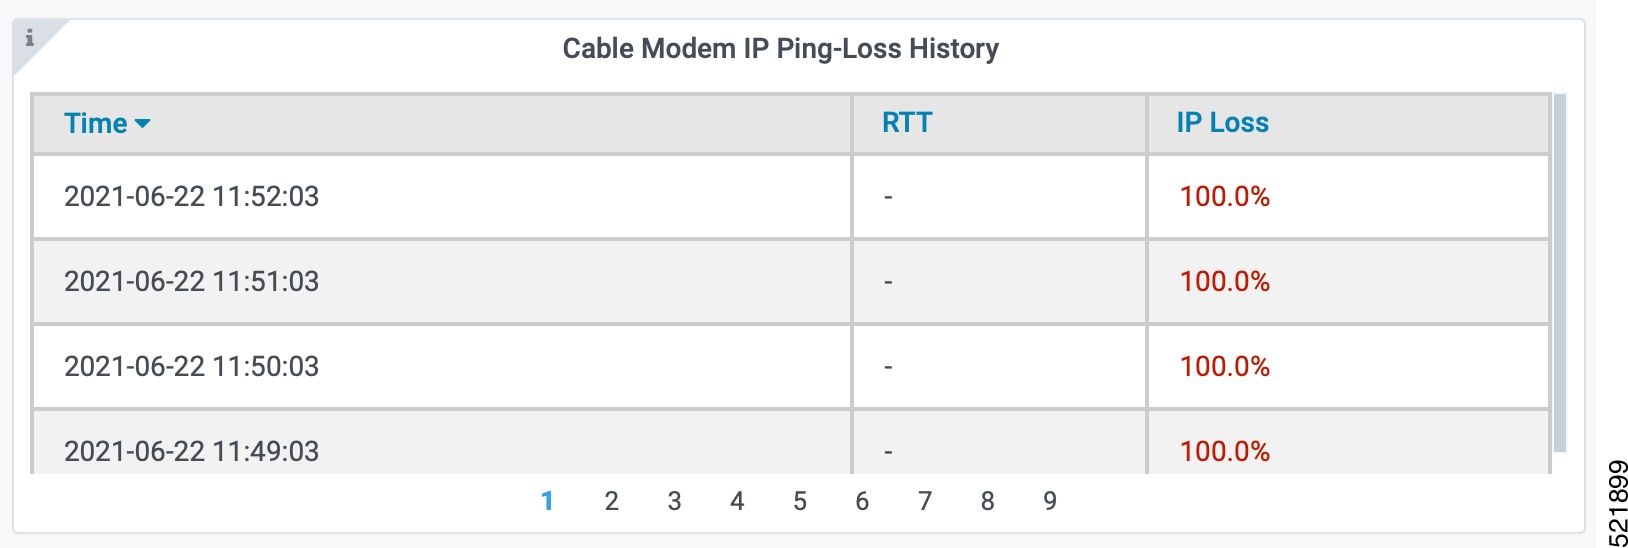 Cable Modem IP Ping-Loss History panel